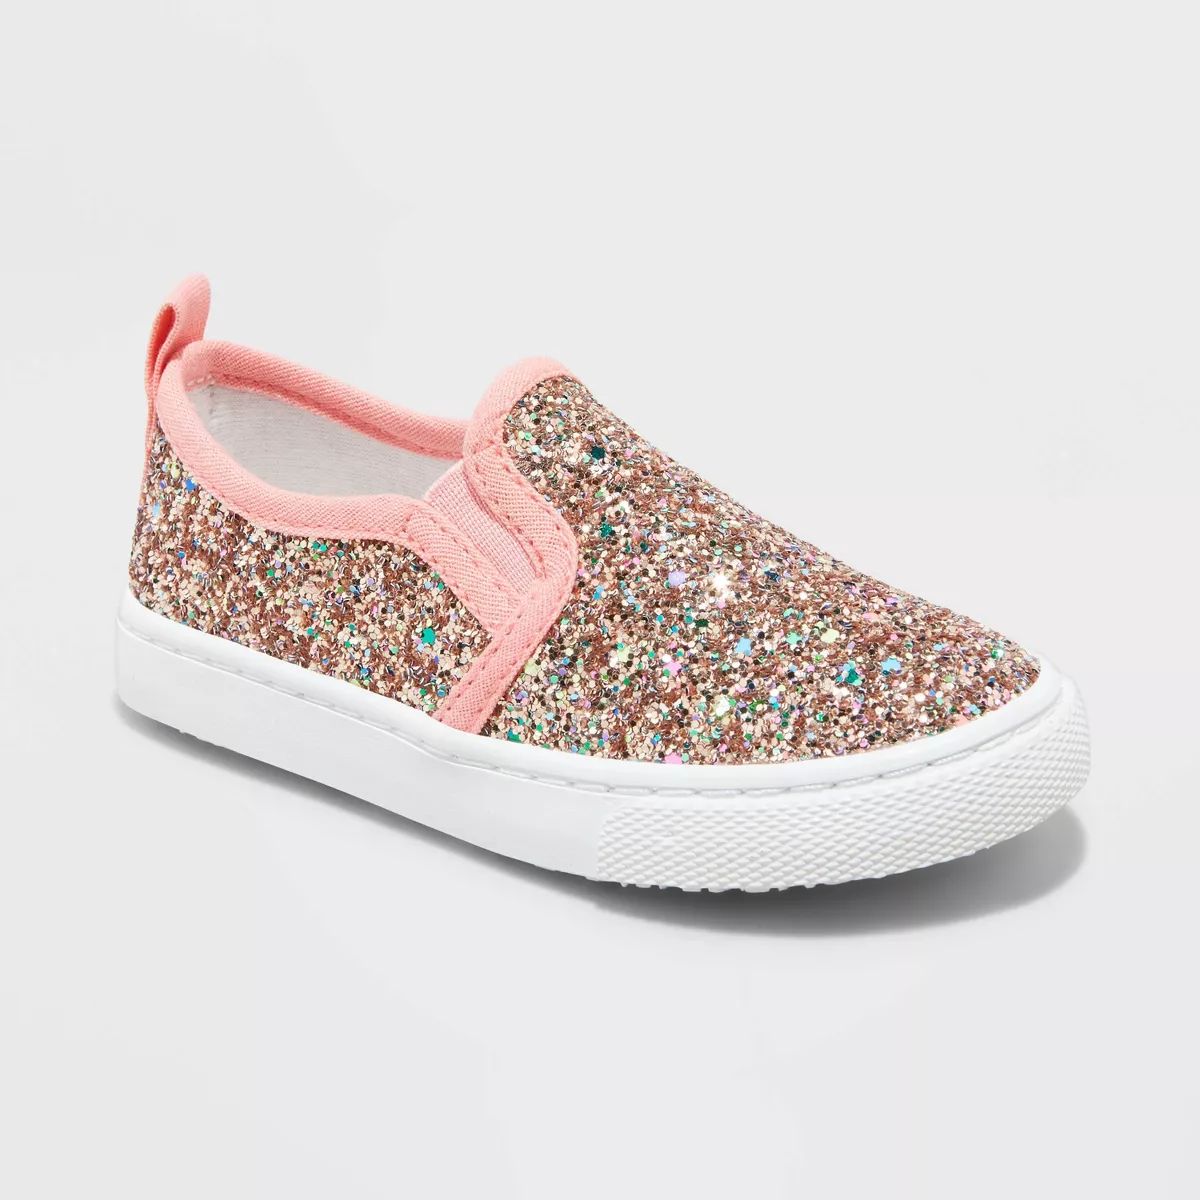 Toddler Girls' Madigan Slip-On Glitter Sneakers - Cat & Jack™ | Target